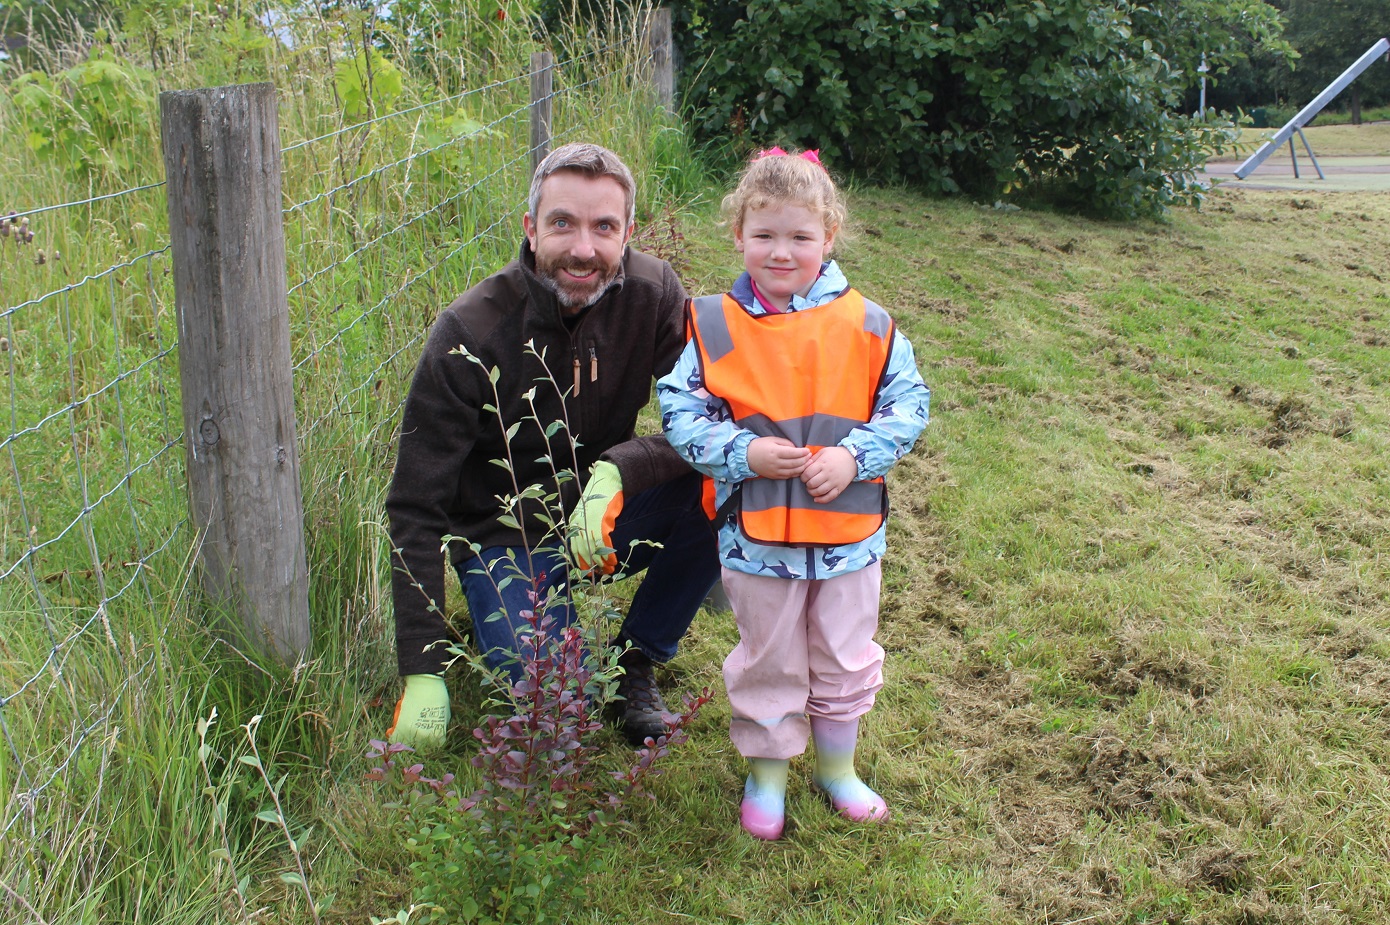 Wheatley Homes Glasgow helps nursery children go green